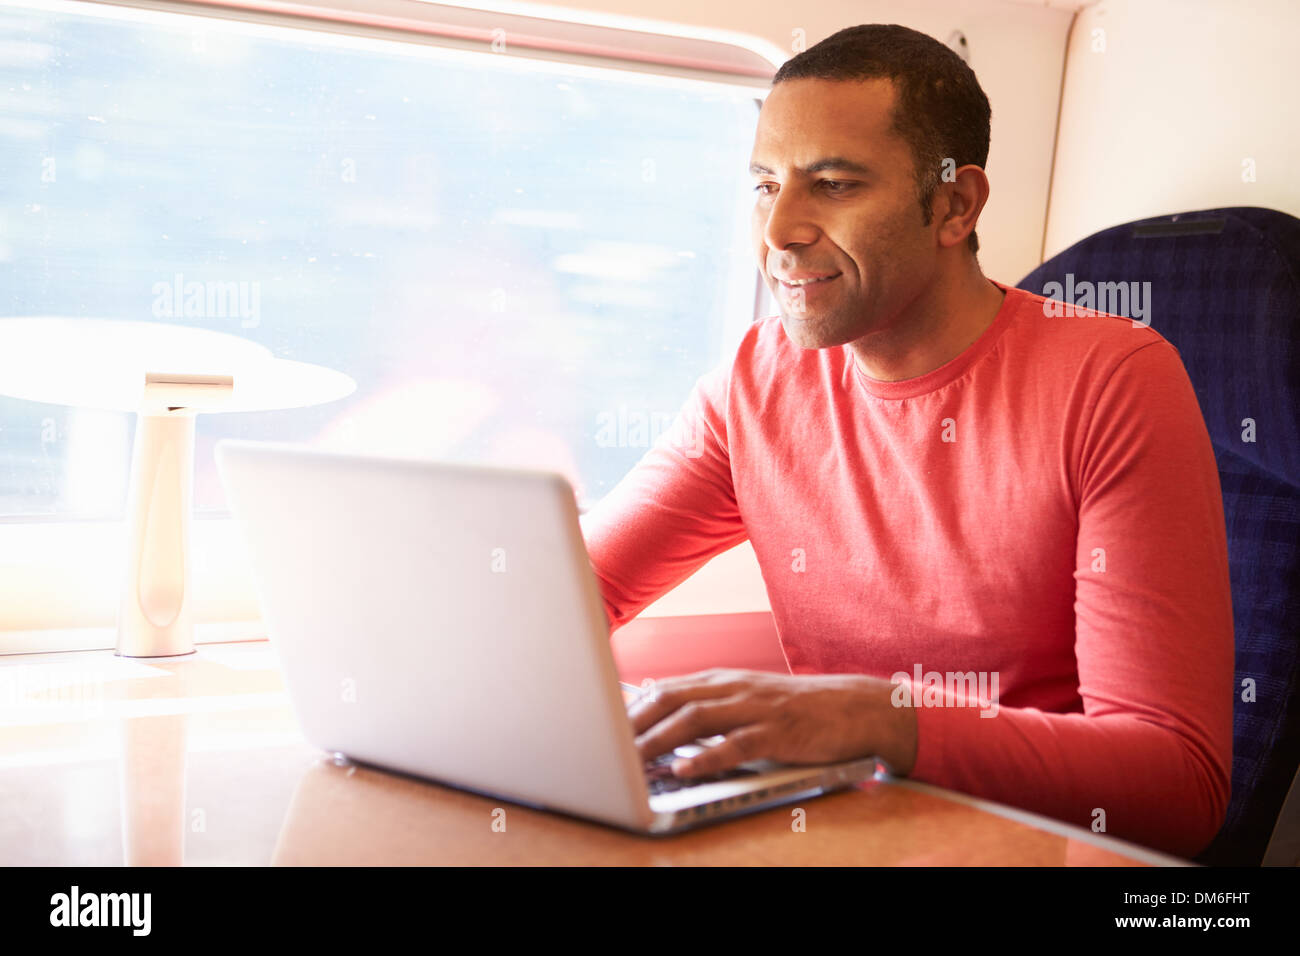 Man Using Laptop On Train Stock Photo